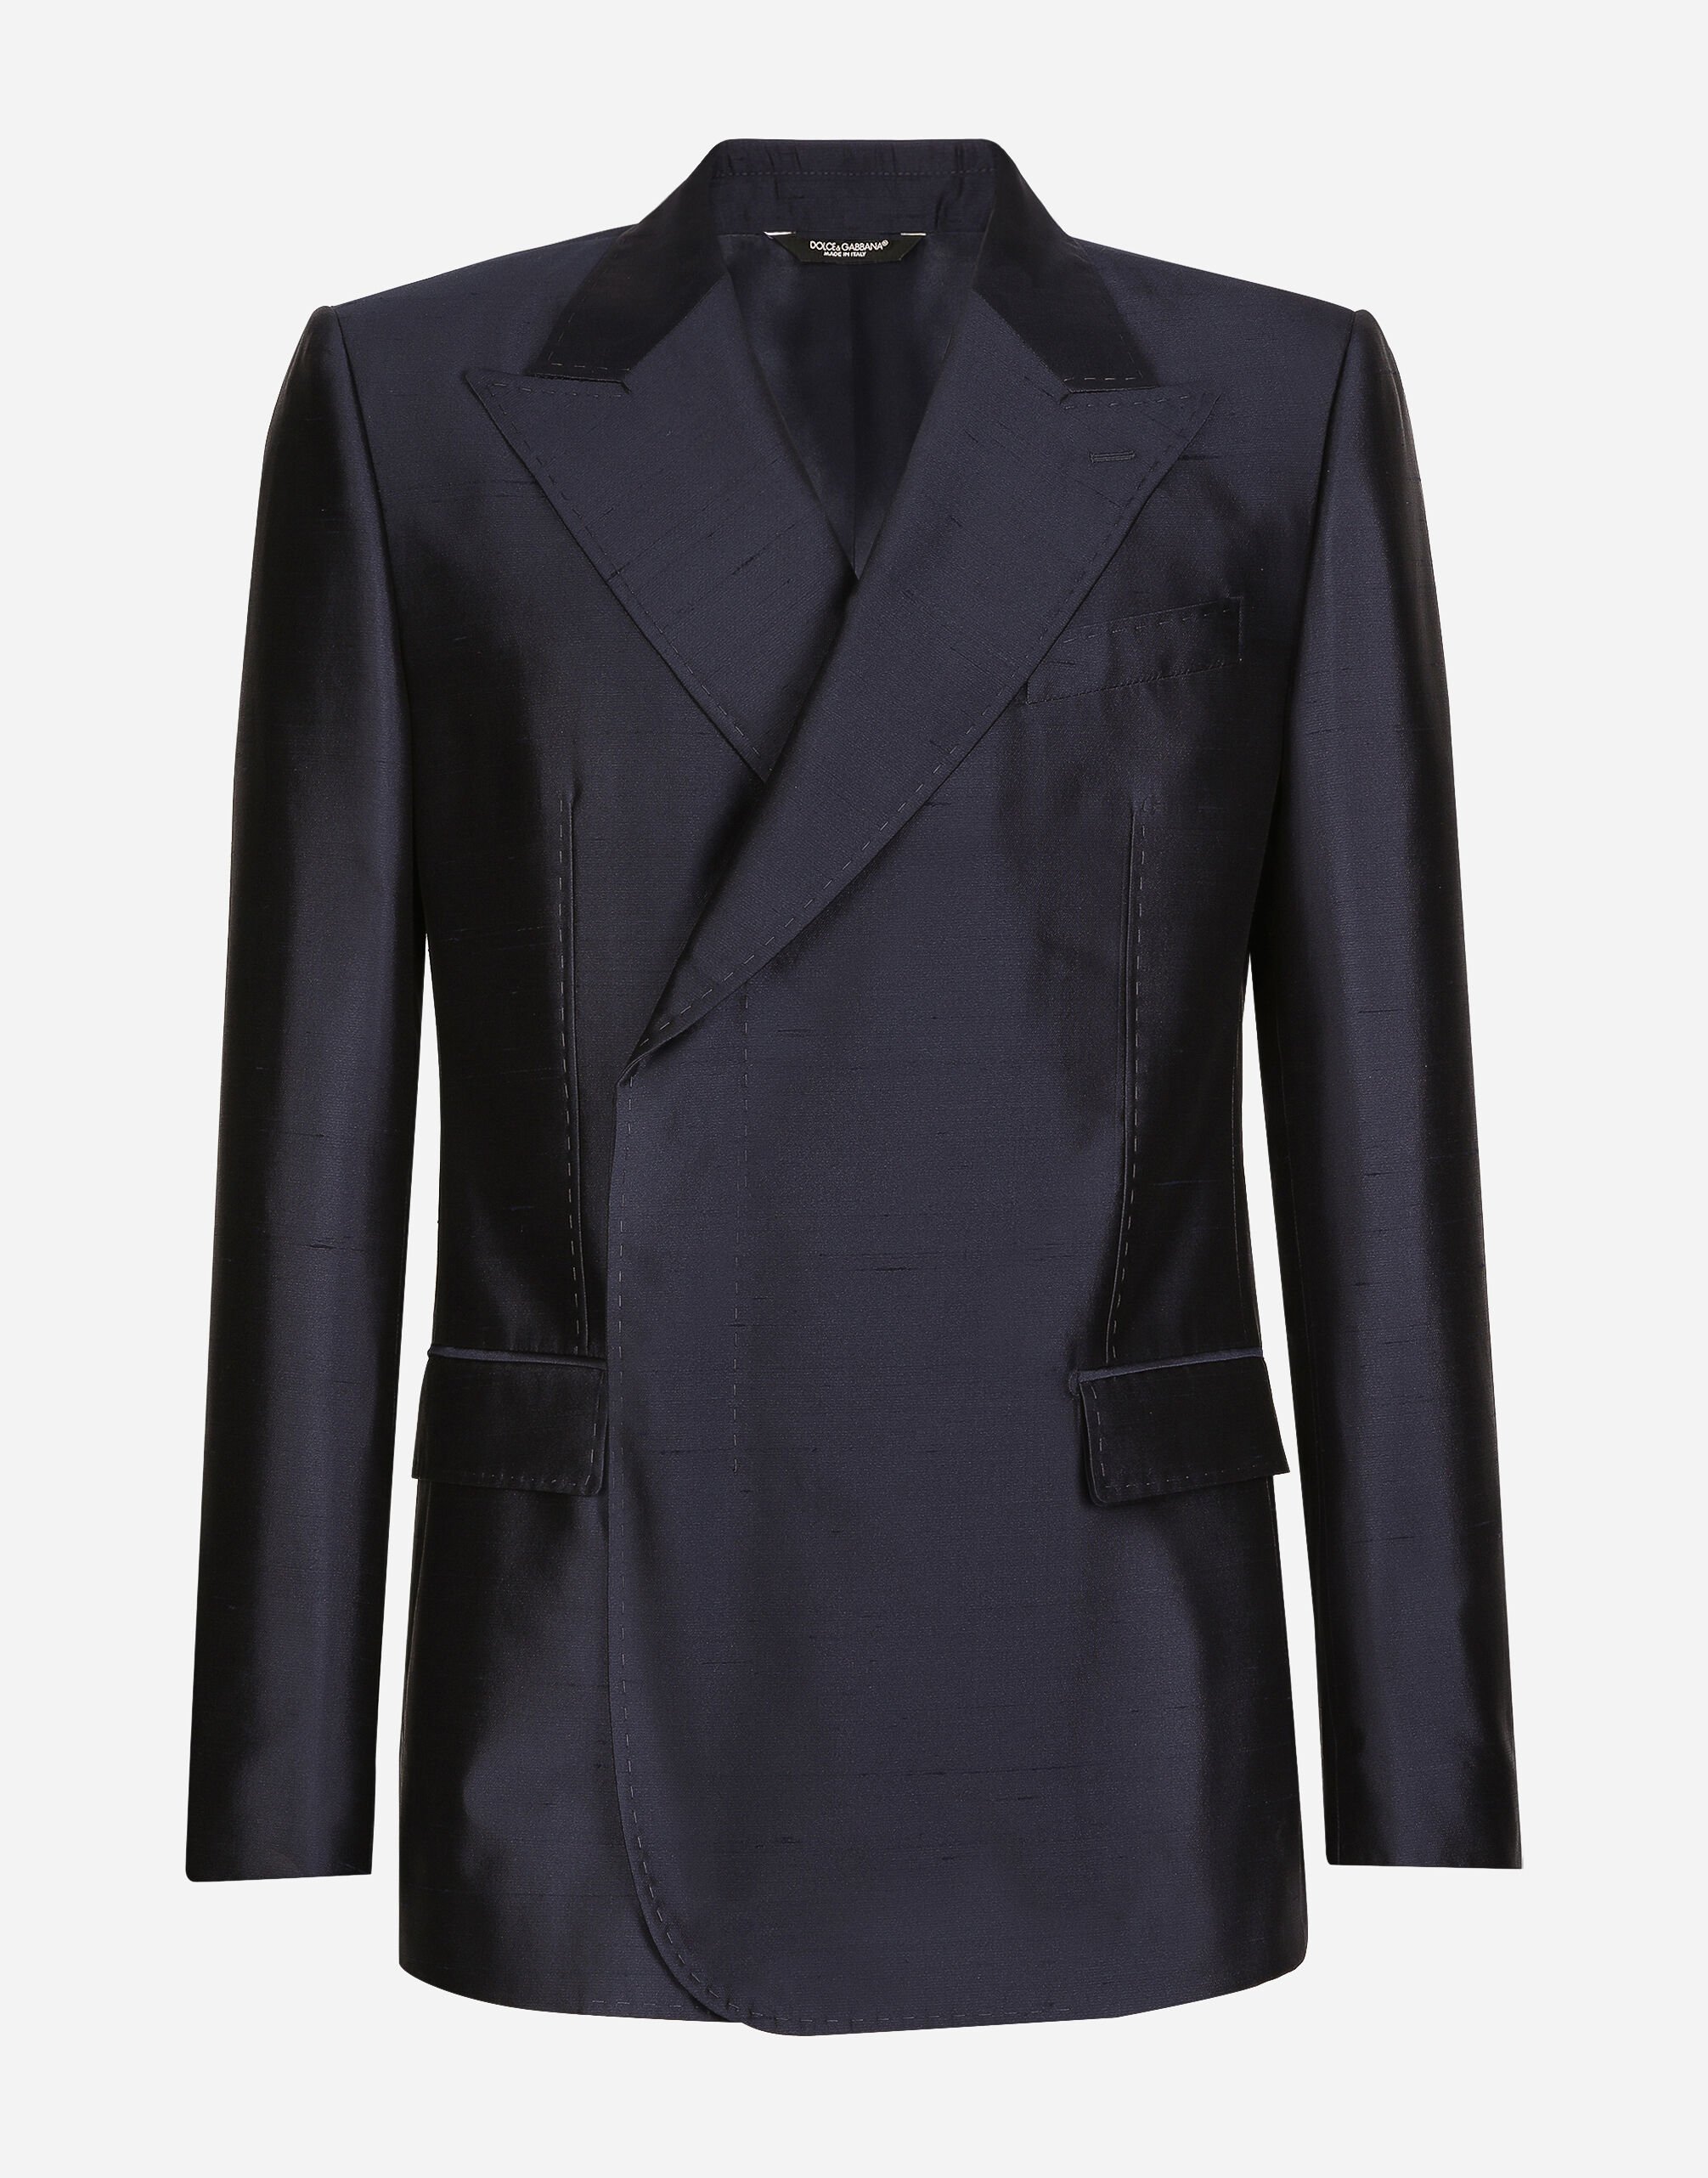 Dolce & Gabbana Zweireihige Jacke Sicilia aus Shantung-Seide Grau G2NW1TFU4LB